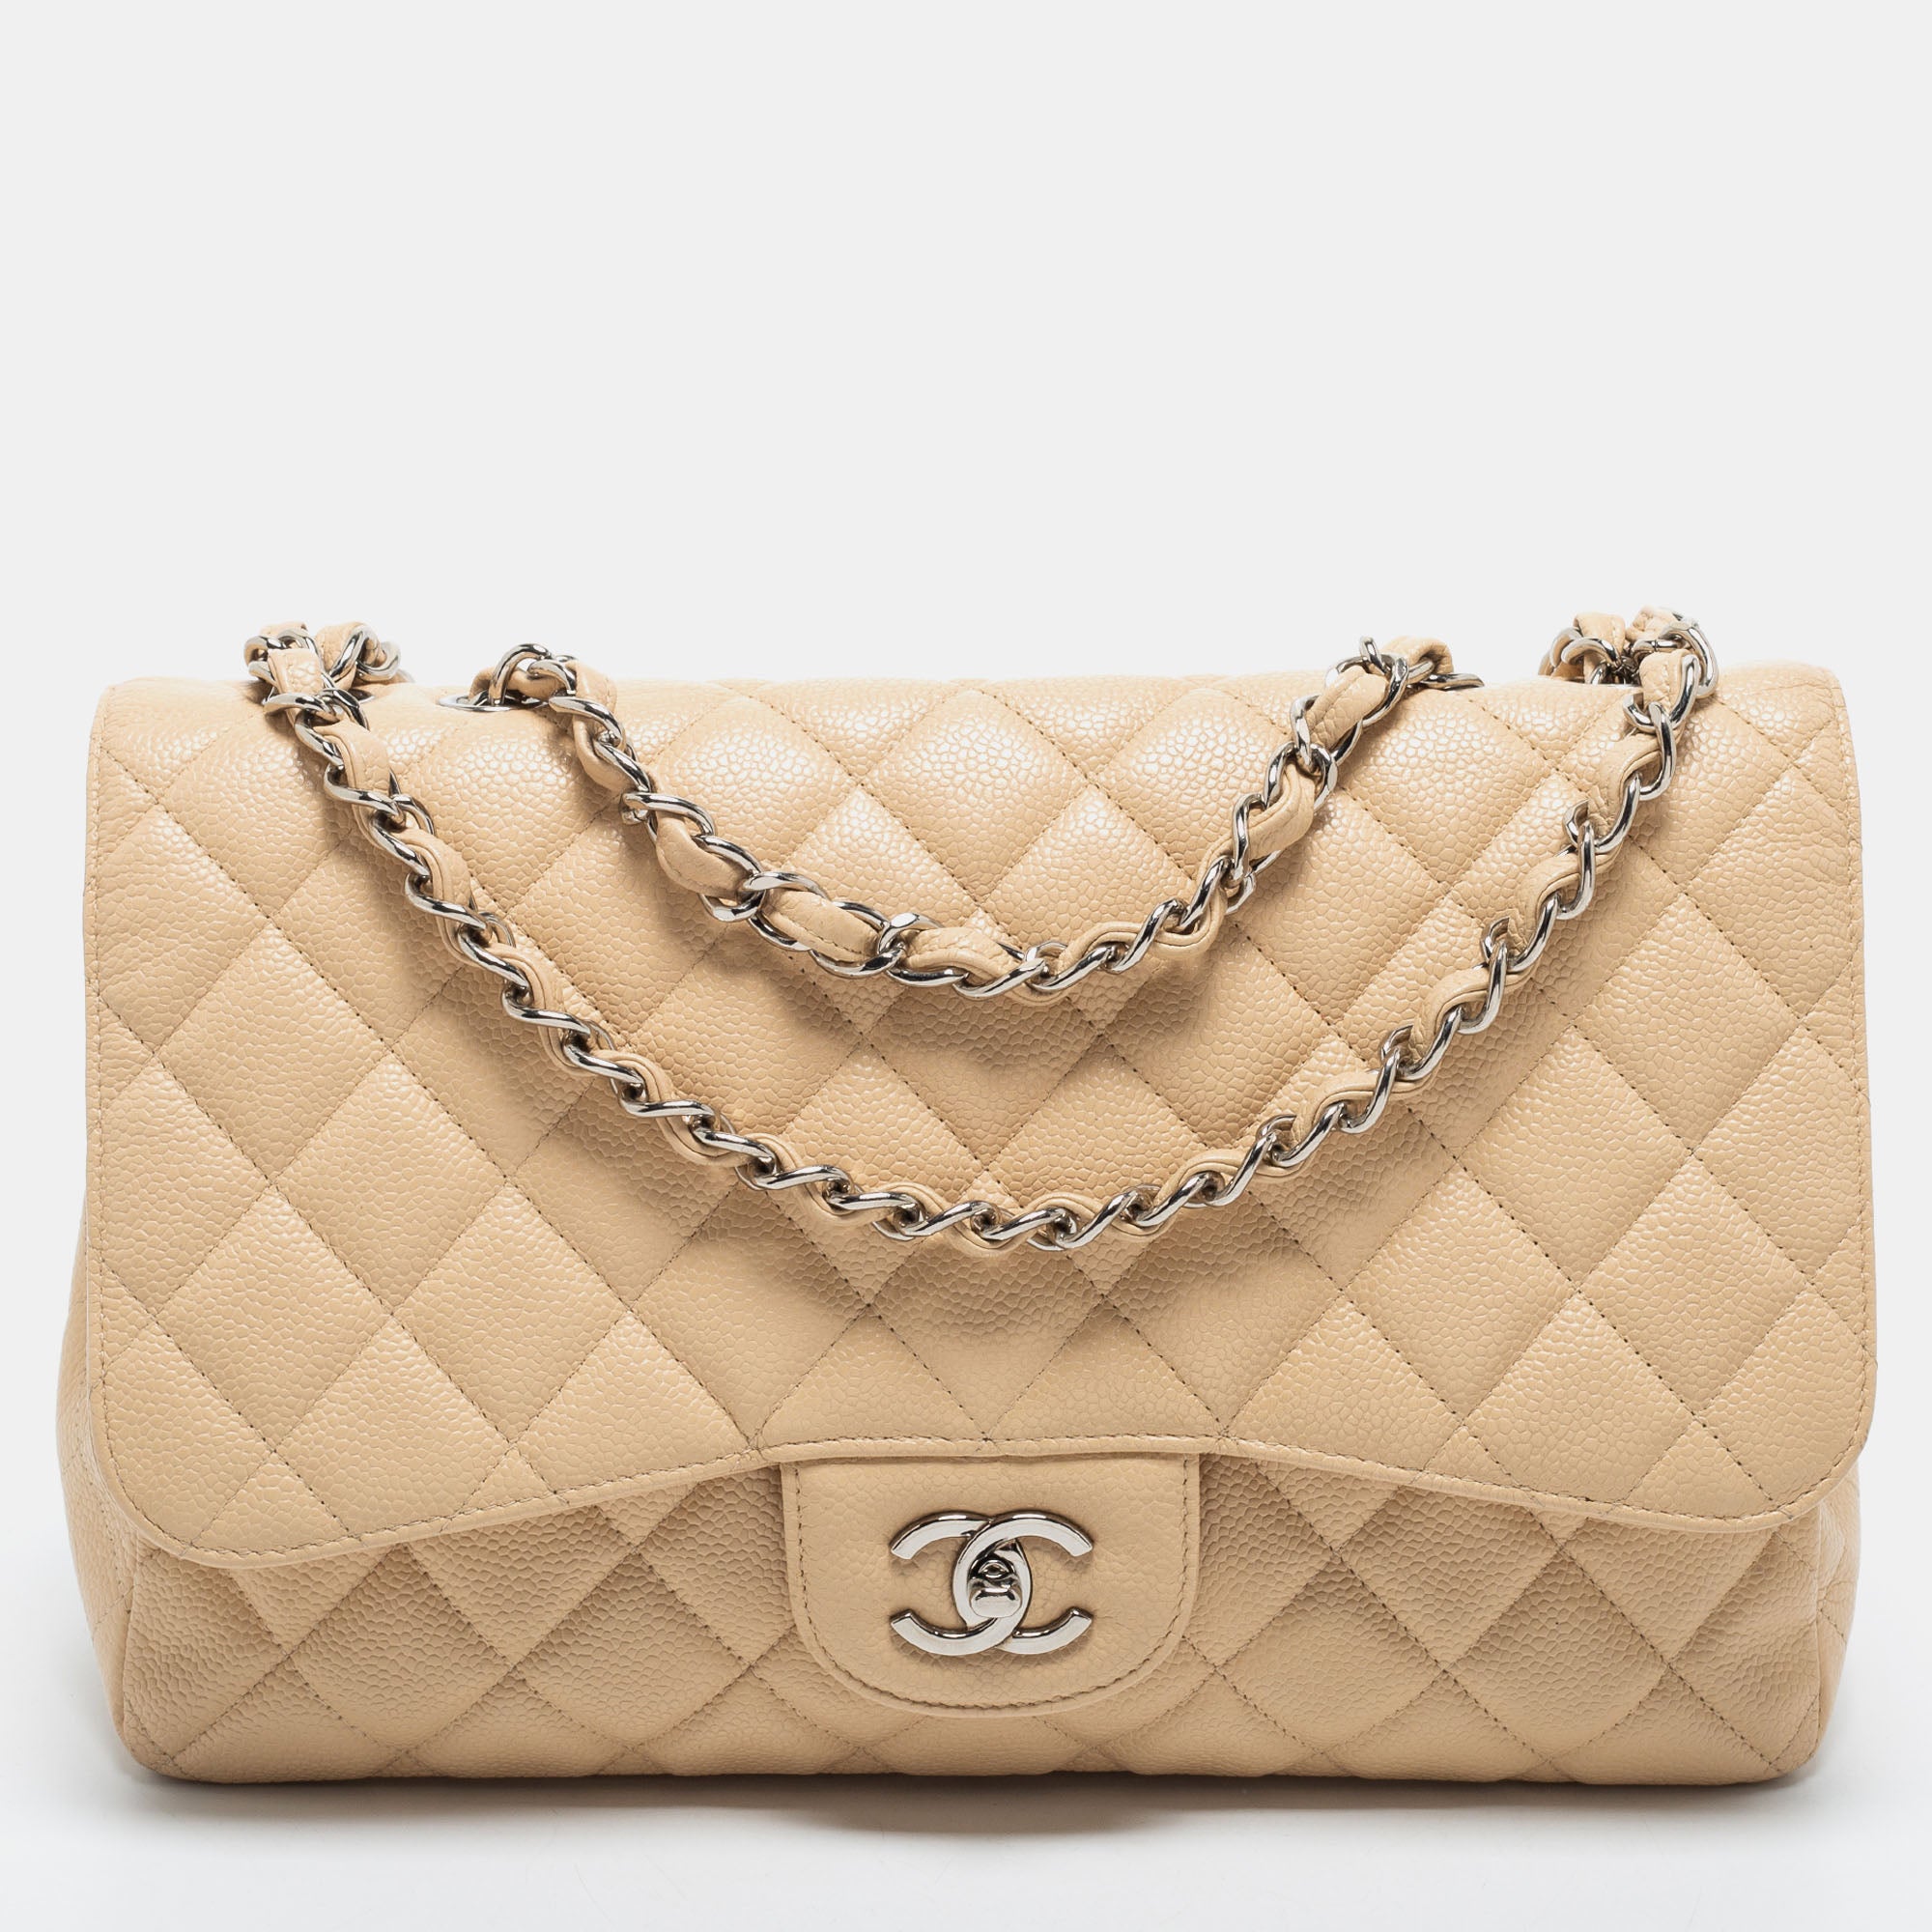 Chanel Medium Classic Flap Beige Caviar Leather Bag Gold Hardware